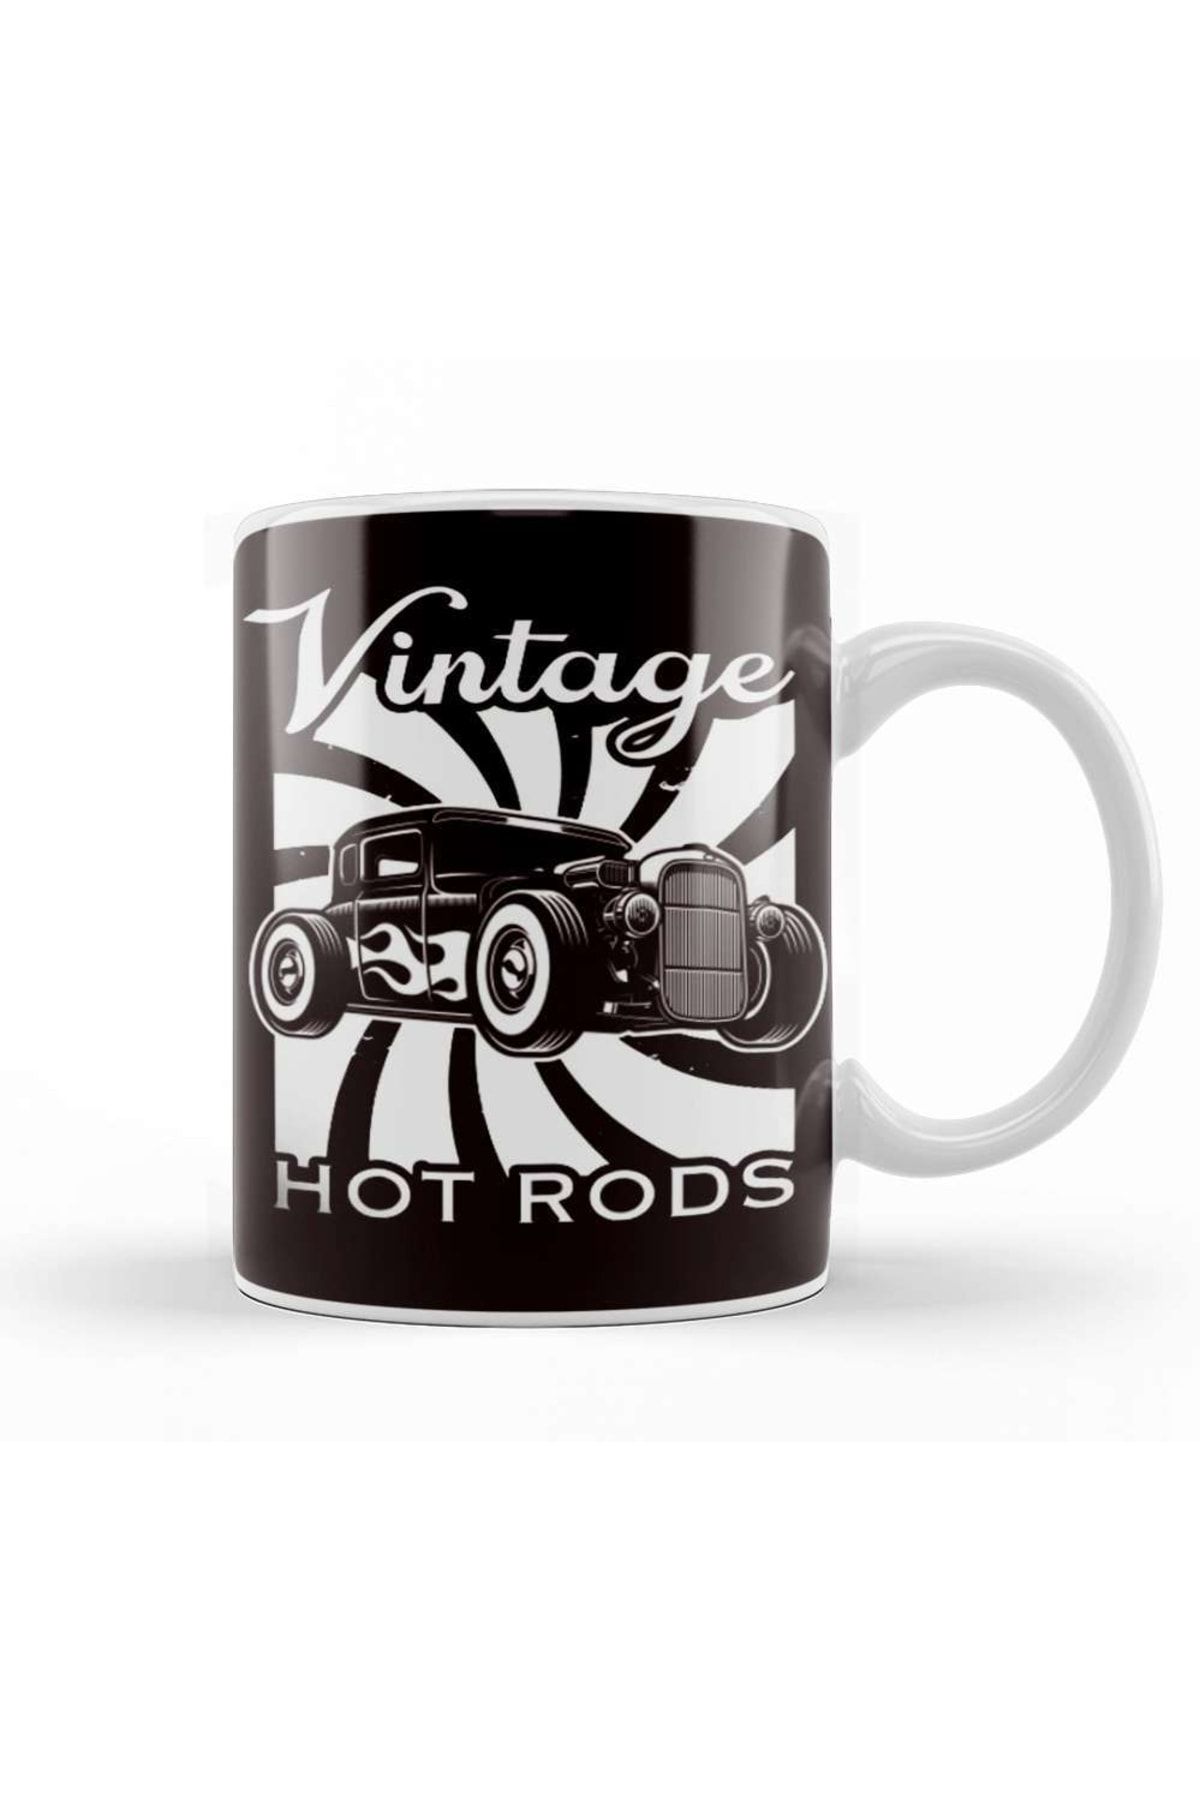 Humuts Vintage Hot Rods Classic Old American Cars Automobile Garage Kupa Bardak Porselen